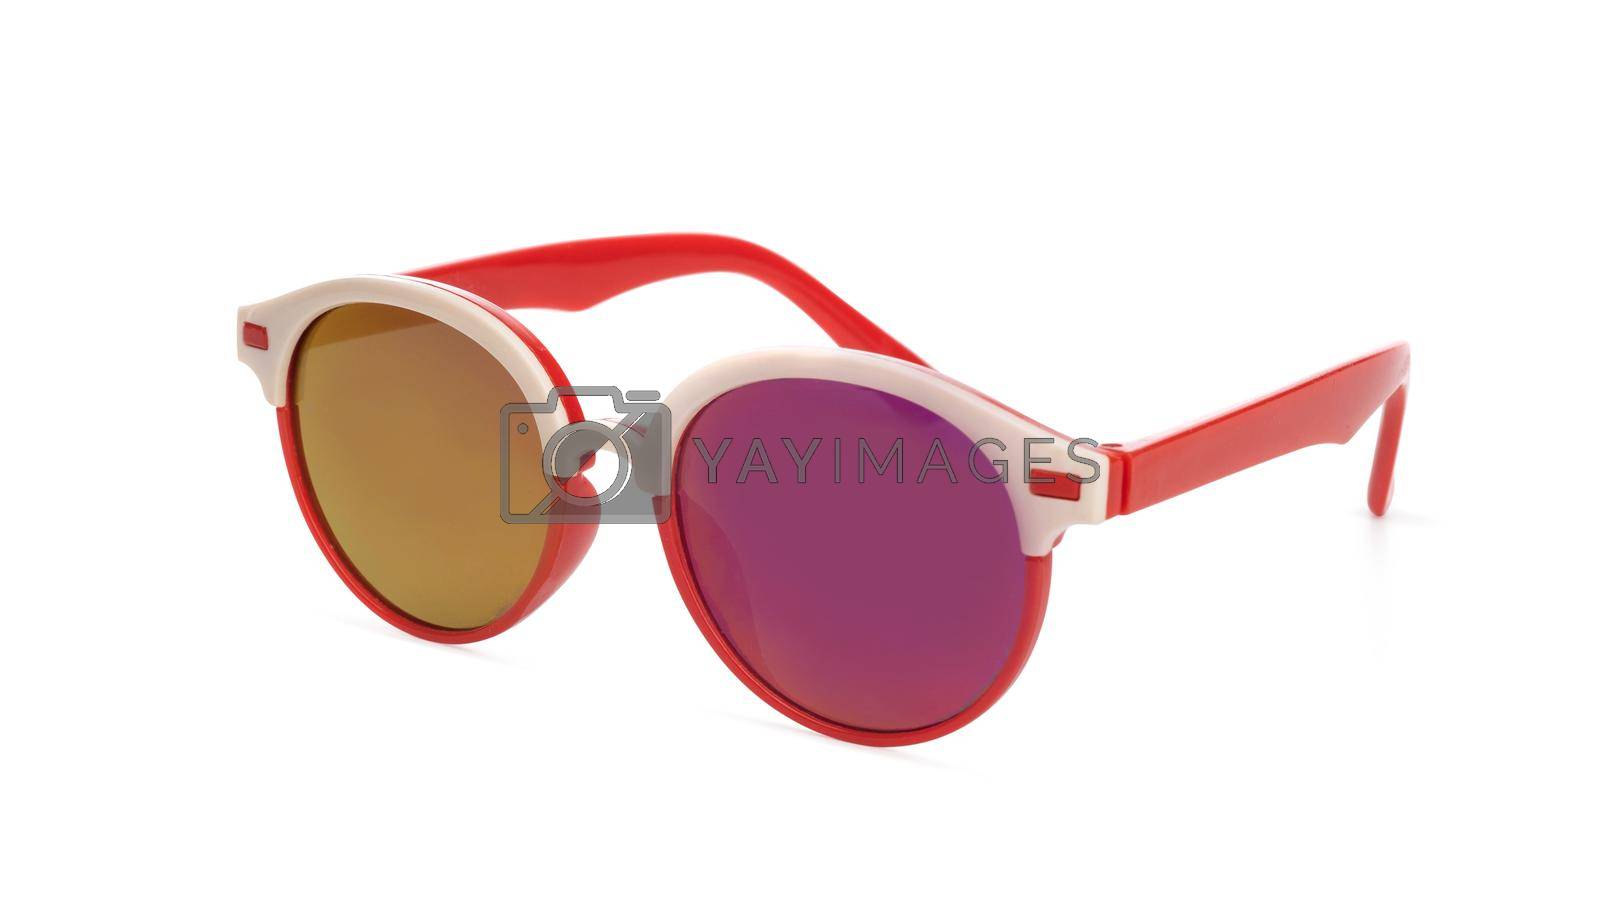 Royalty free image of Sunglasses in red frame by GekaSkr